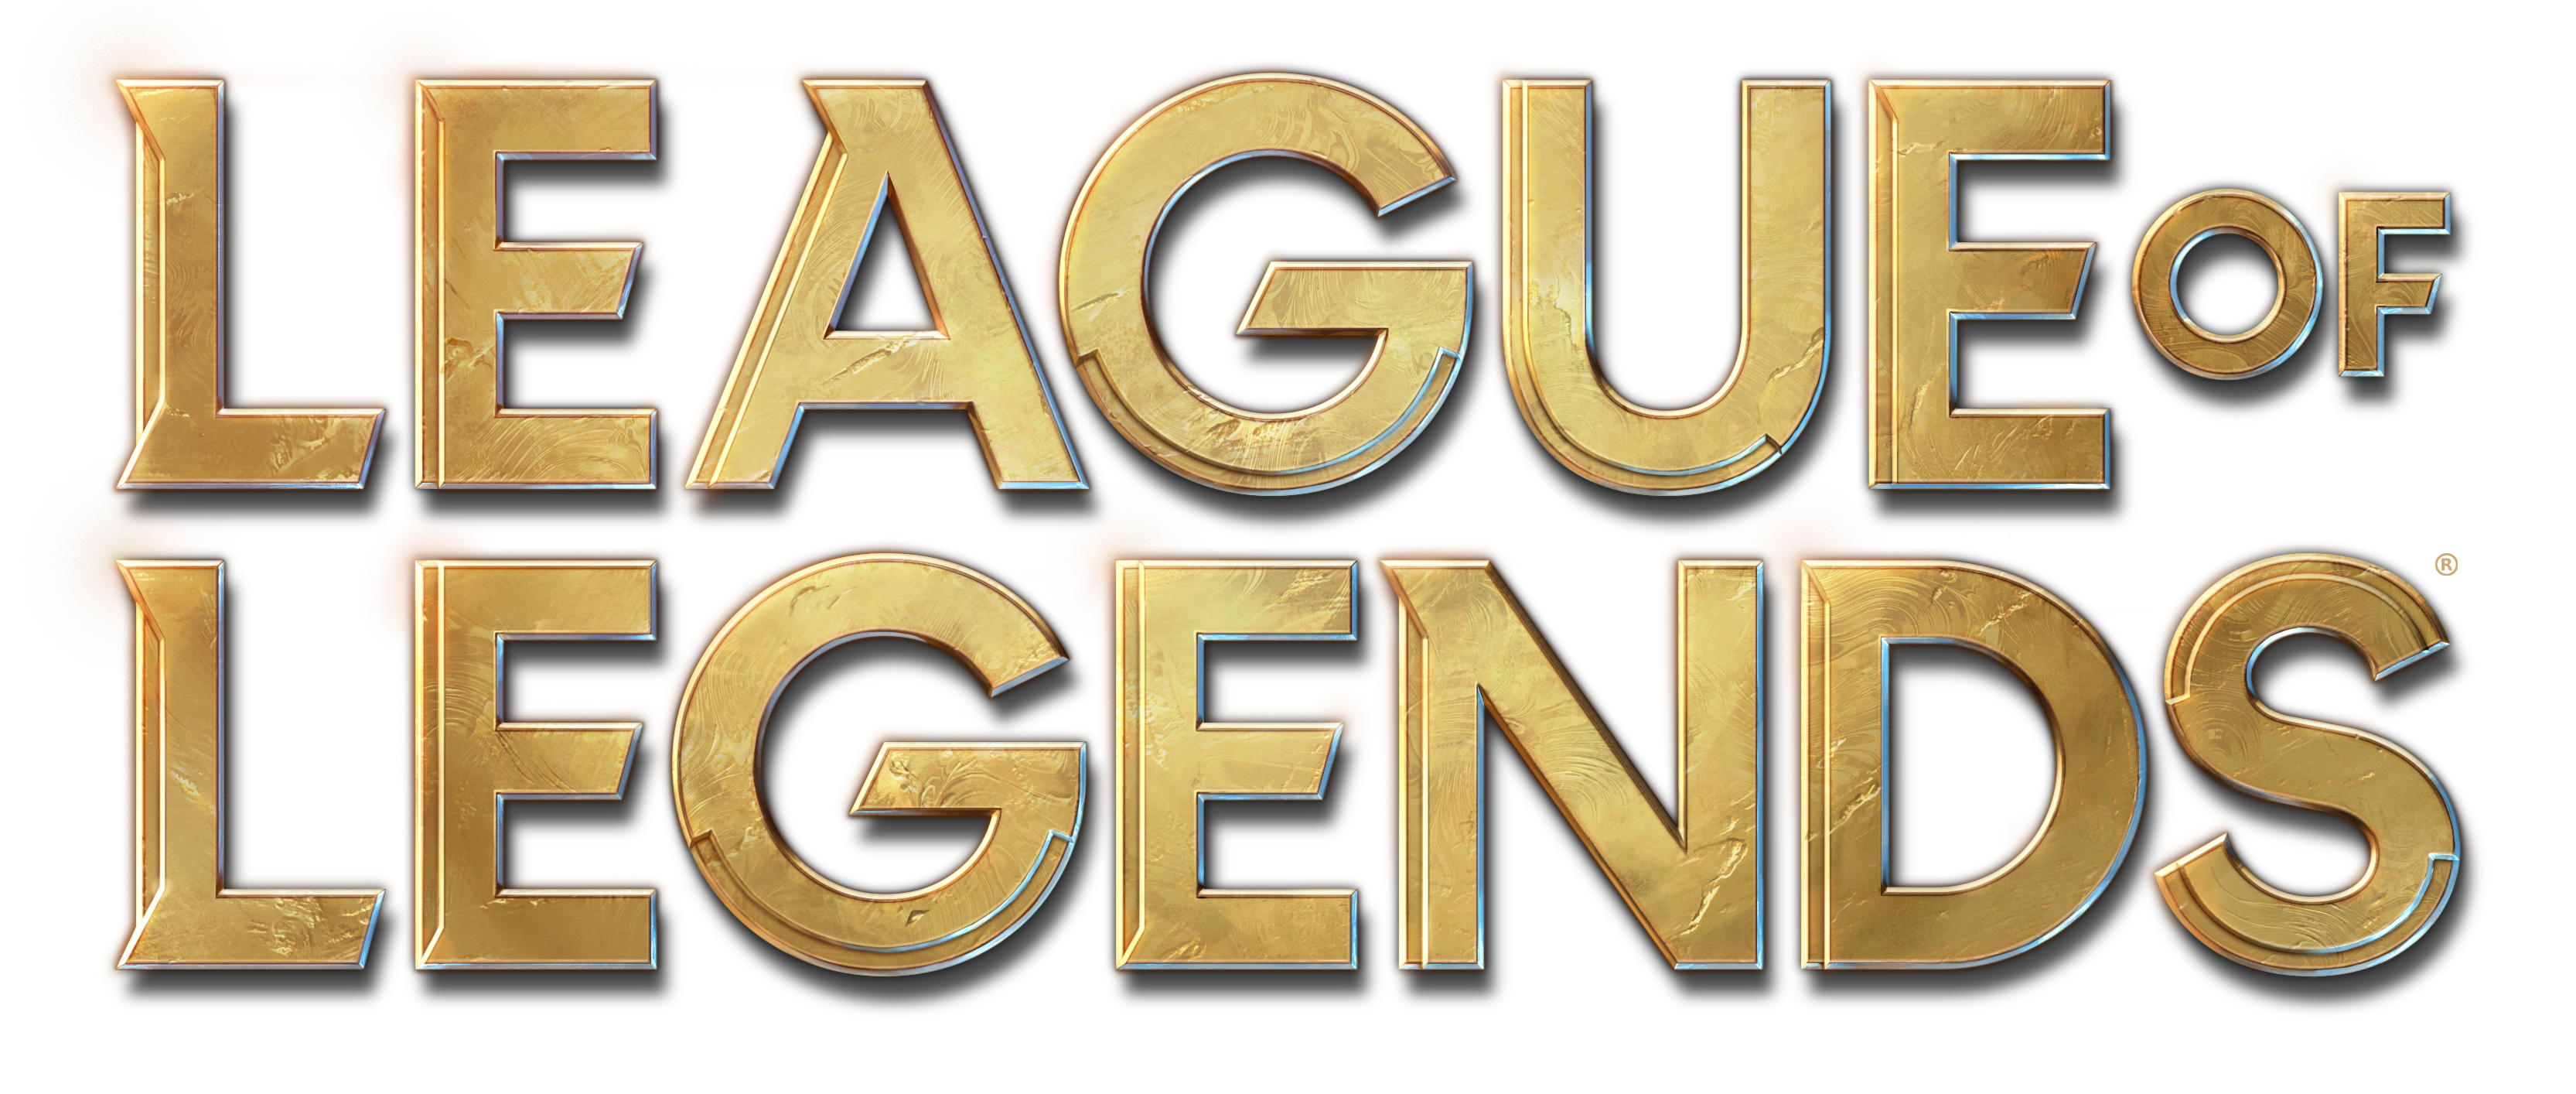 Lol League Of Legends Logo.